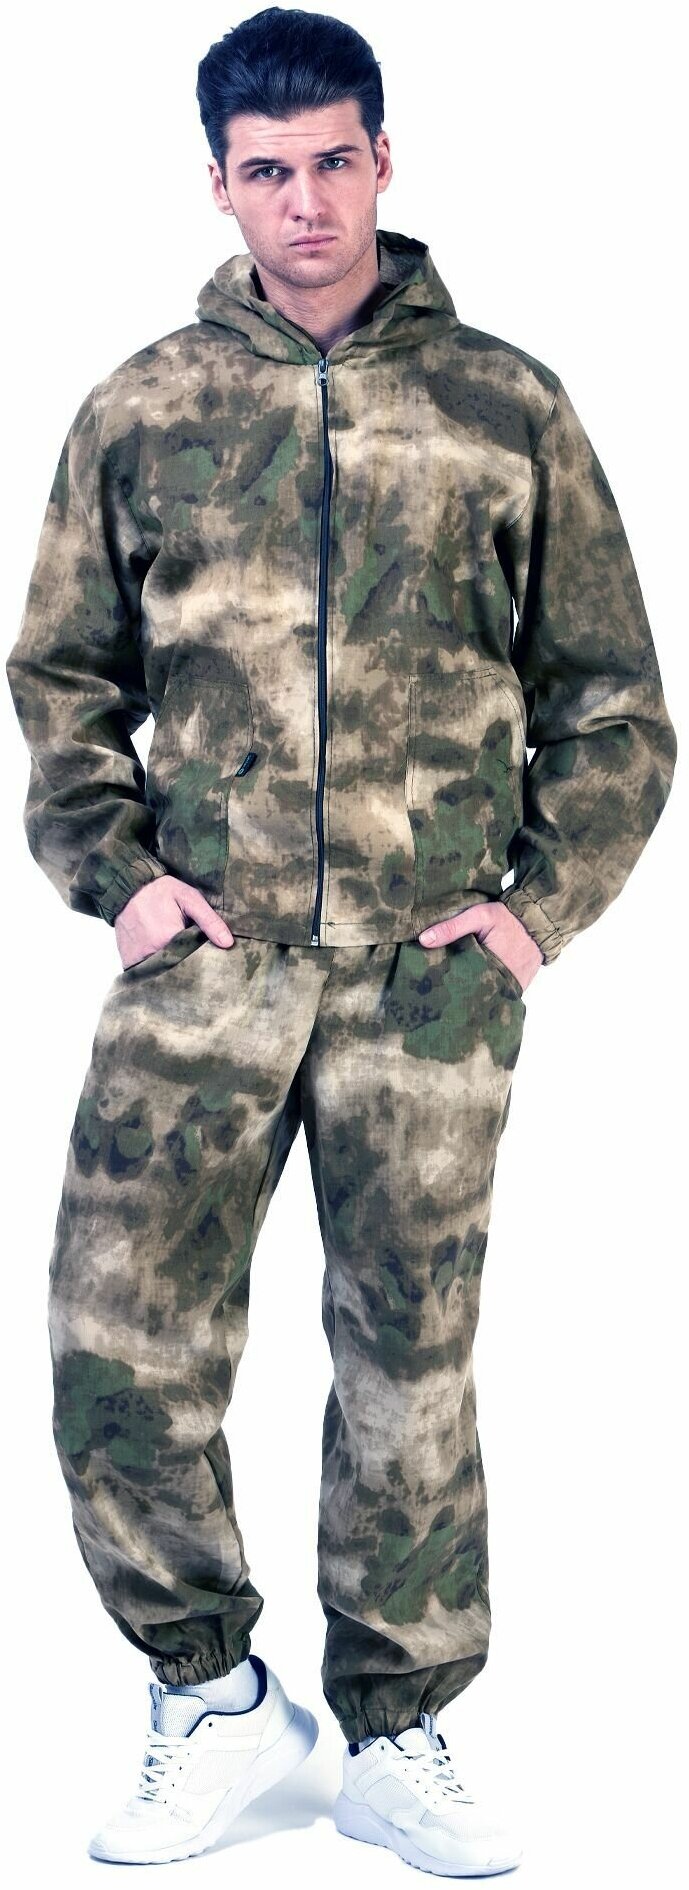 Маскировочный костюм(куртка+брюки) мужской Prival Летний, 56-58/182, кмф Мох